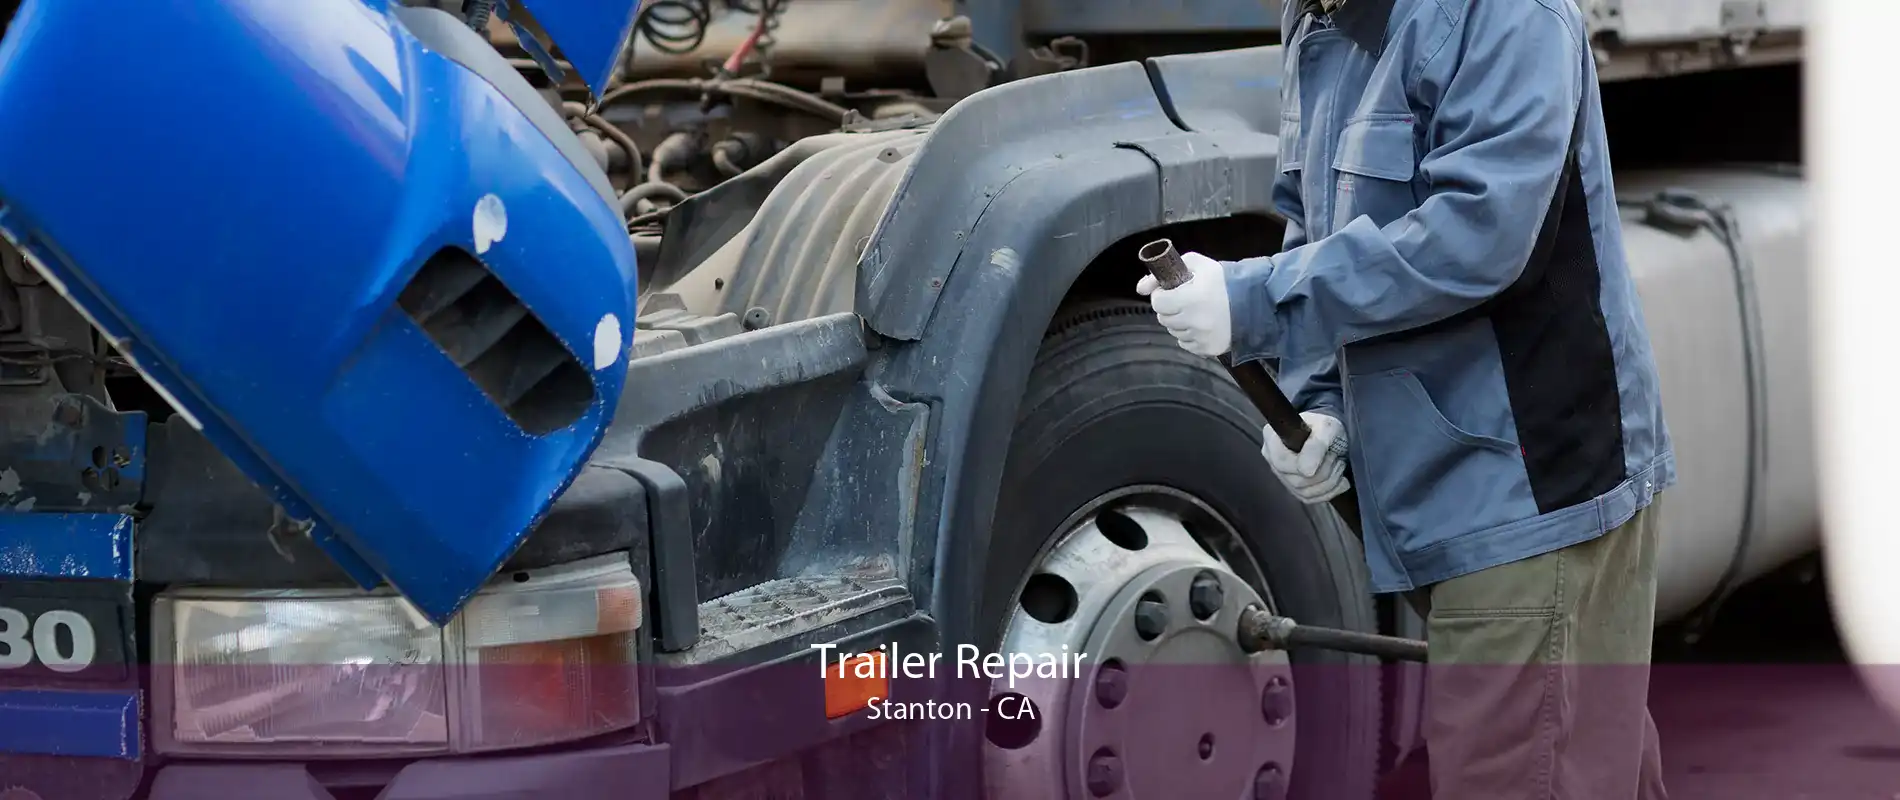 Trailer Repair Stanton - CA